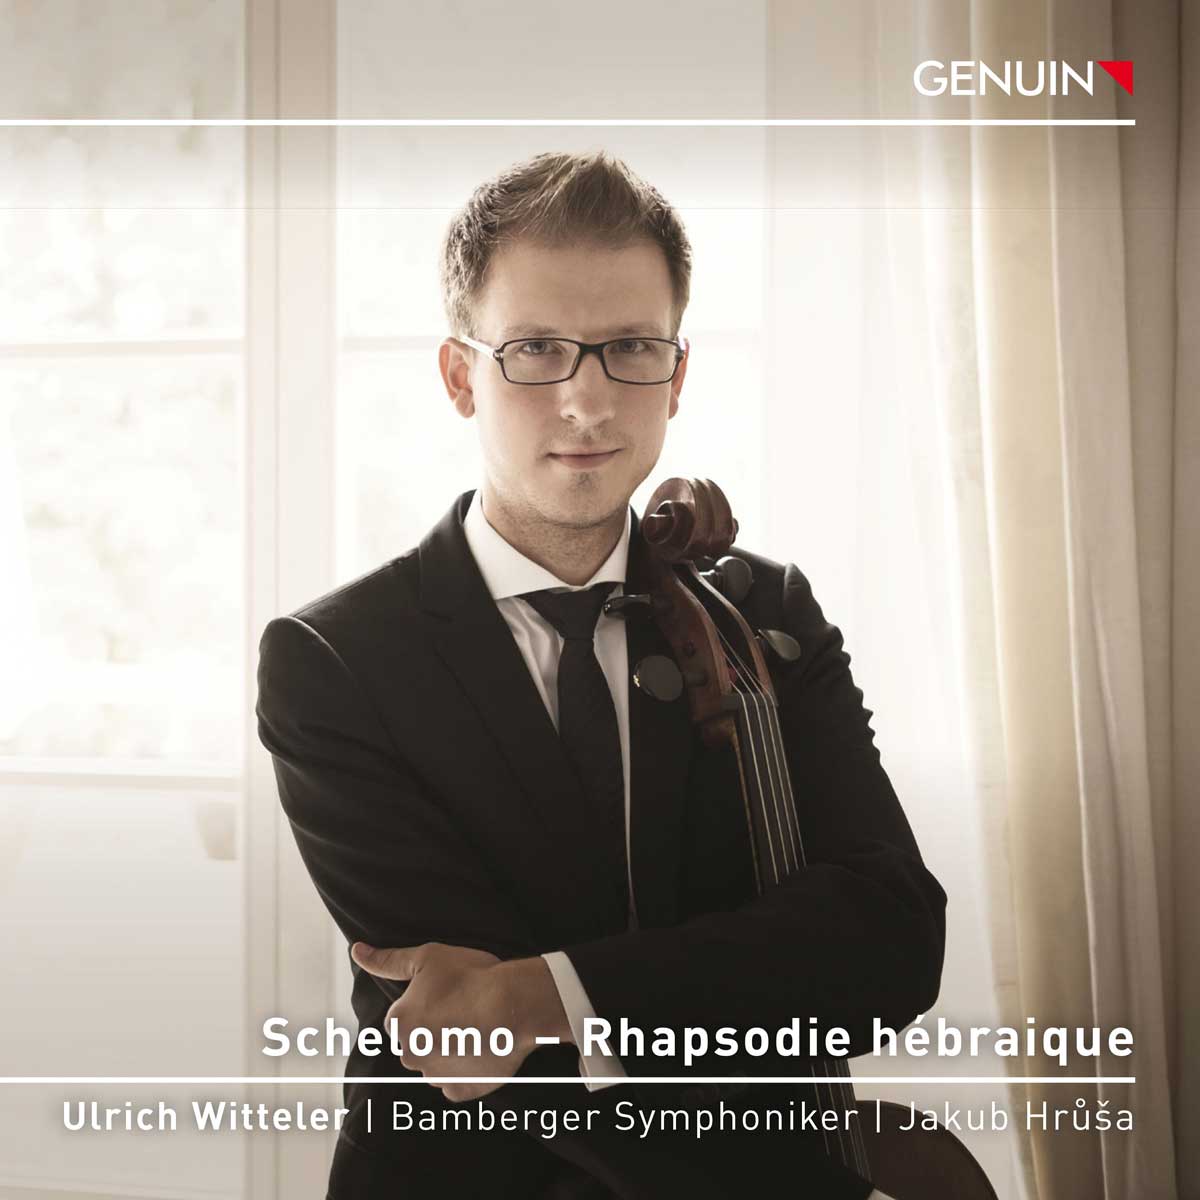 CD album cover 'Schelomo  Rhapsodie hbraique' (GEN 23843d) with Ulrich Witteler ...